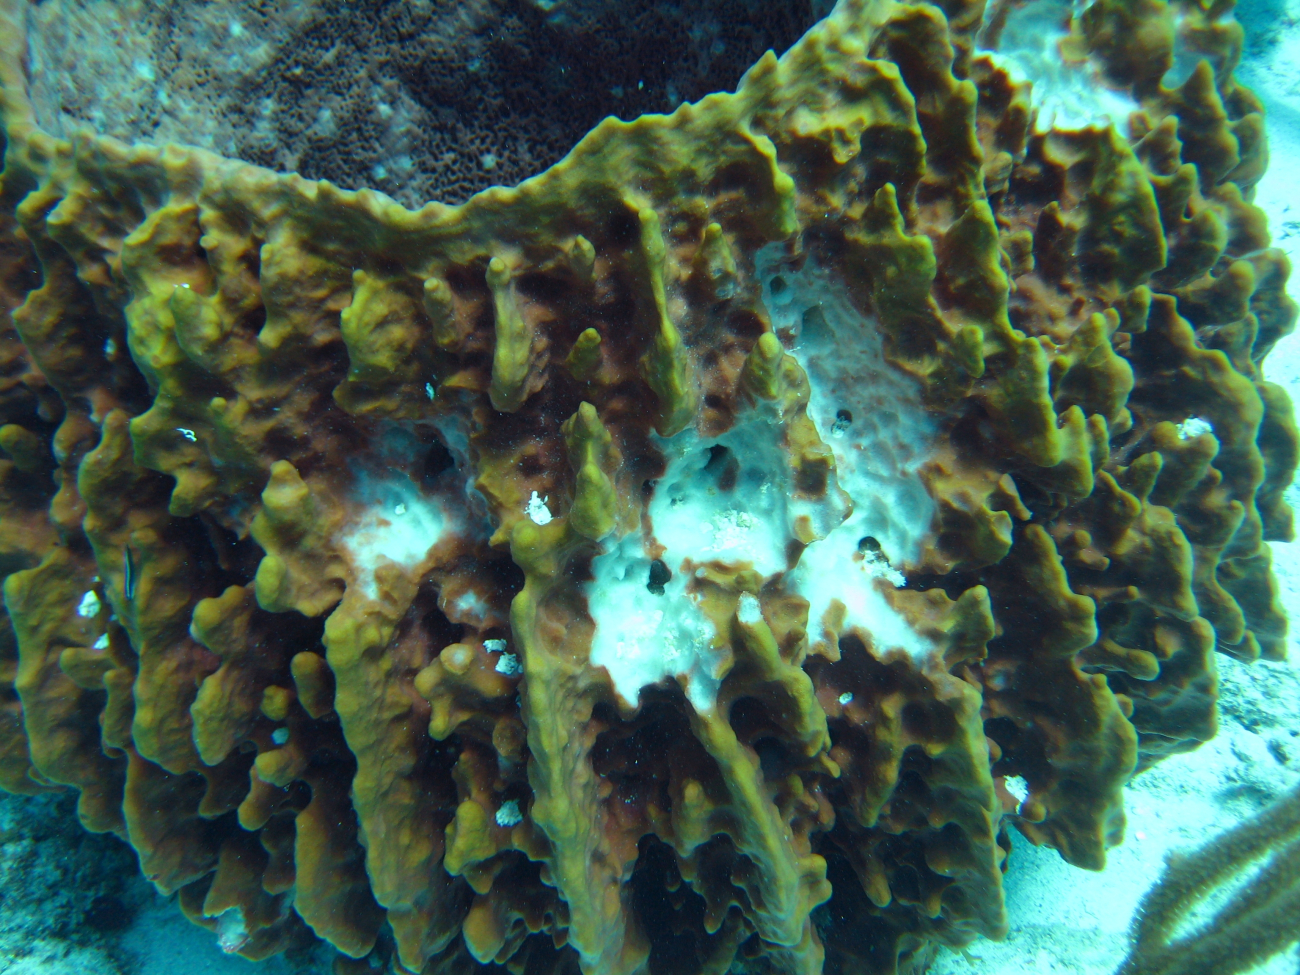 Brown barrel sponge (Porifera sp